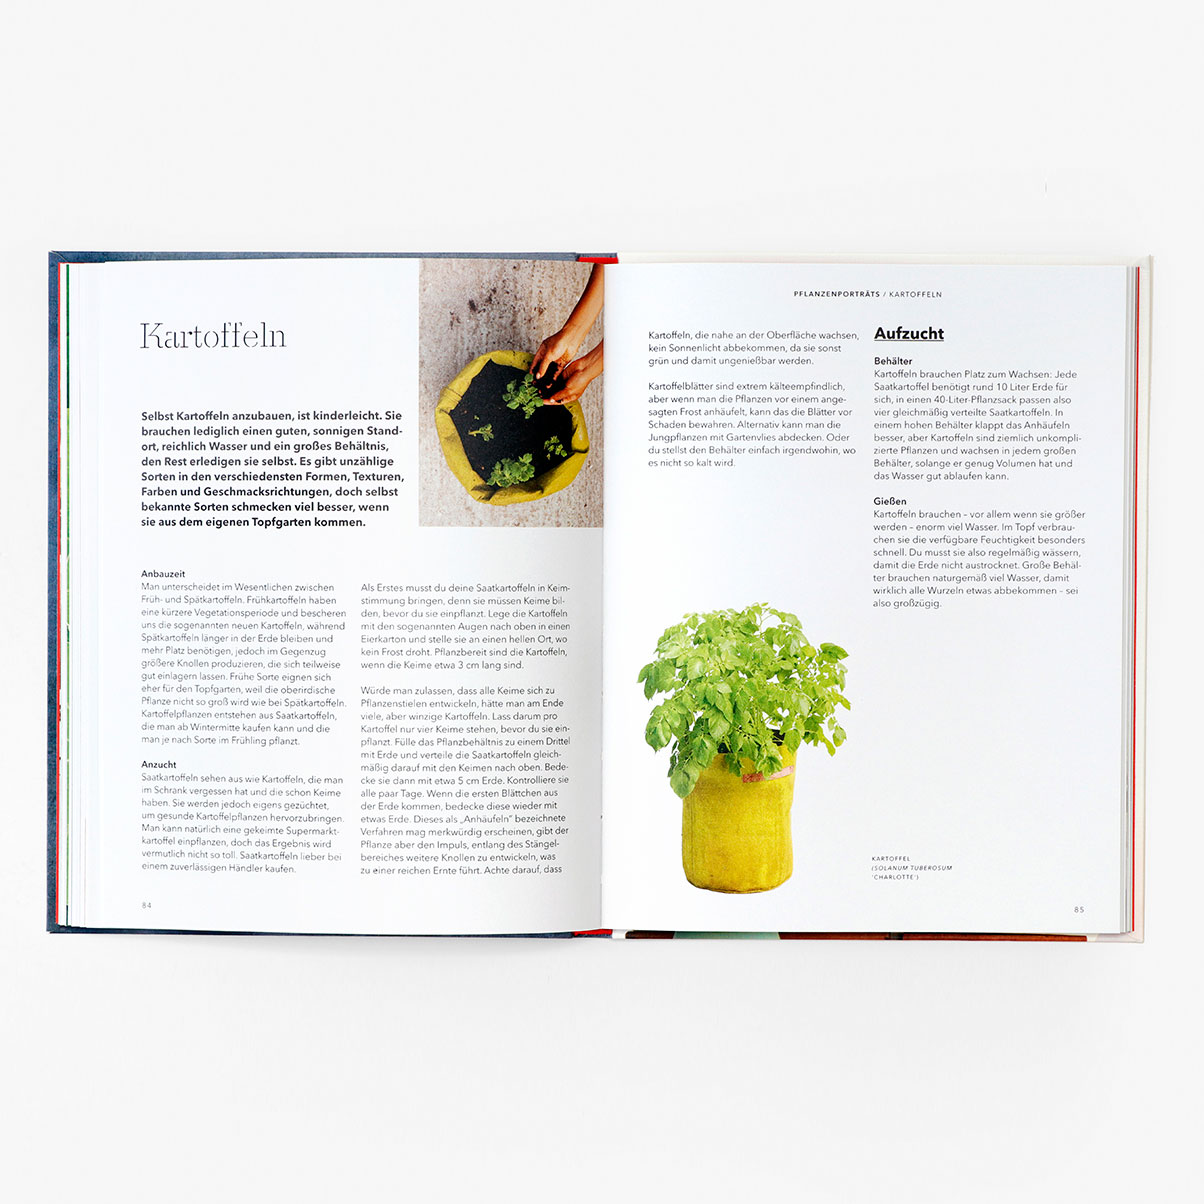 How to grow your dinner: Buch mit Tipps wie man zuhause Gemüse selbst anbaut.